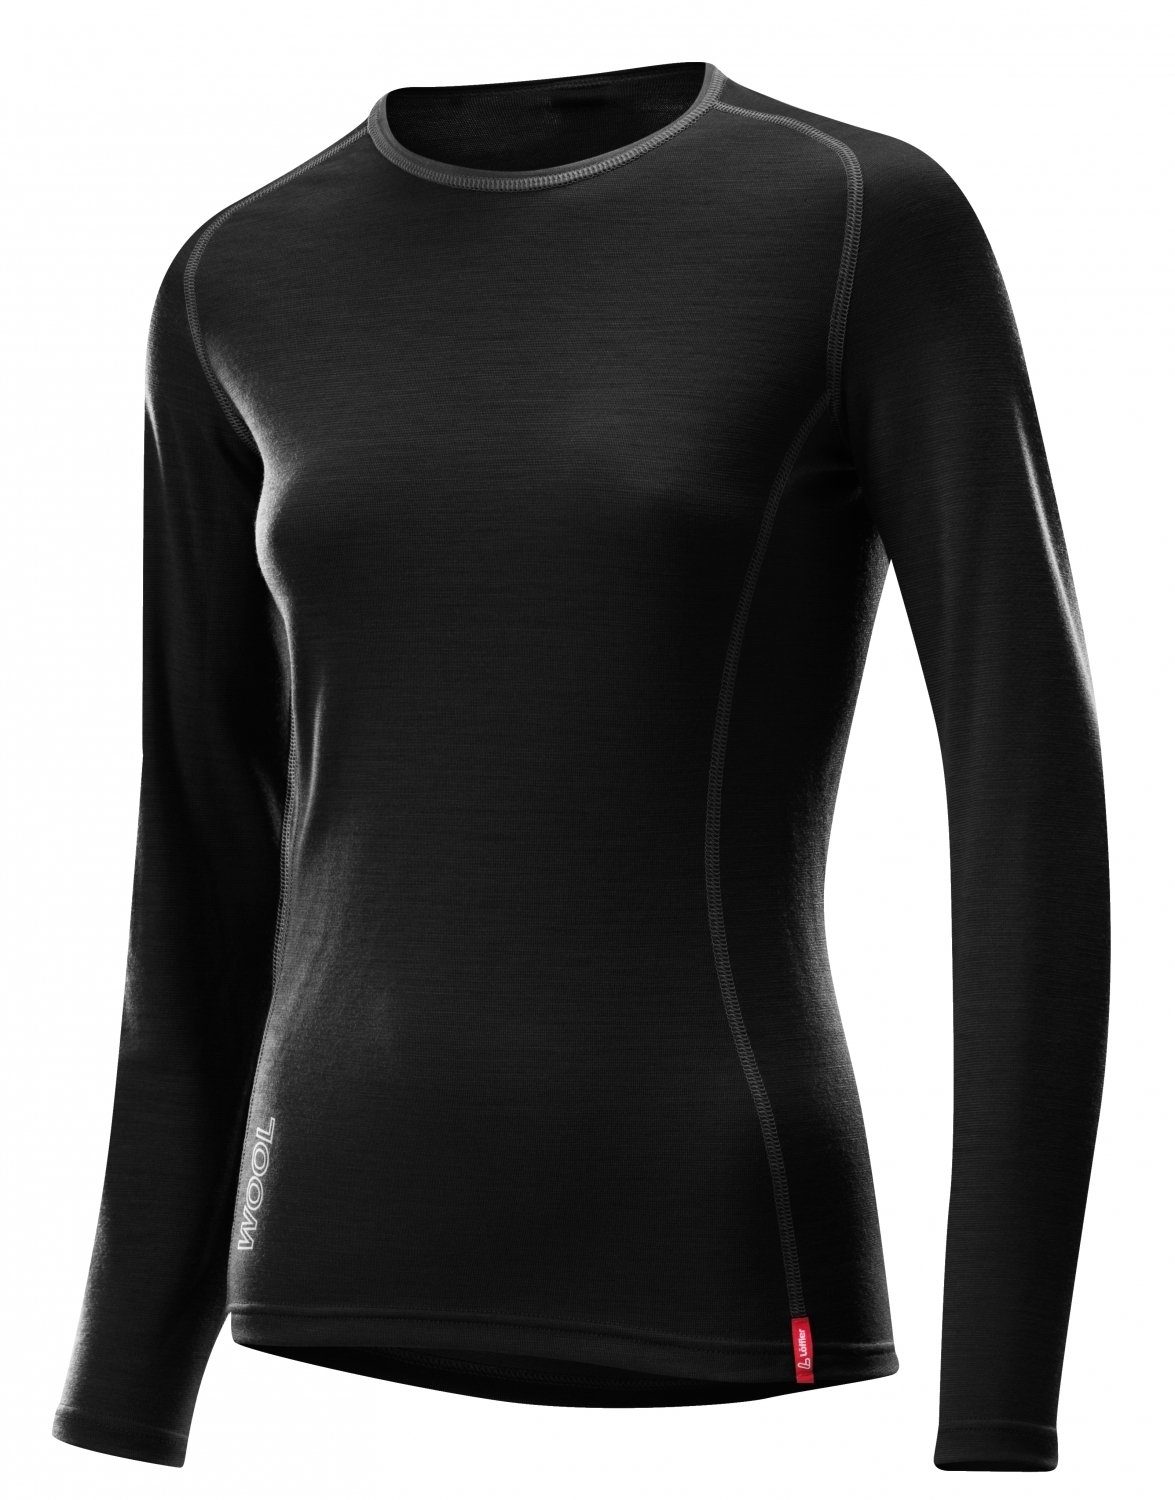 Damen schwarz Löffler Funktionsunterhemd Funktionsunterhemd Merino langarm Transtex